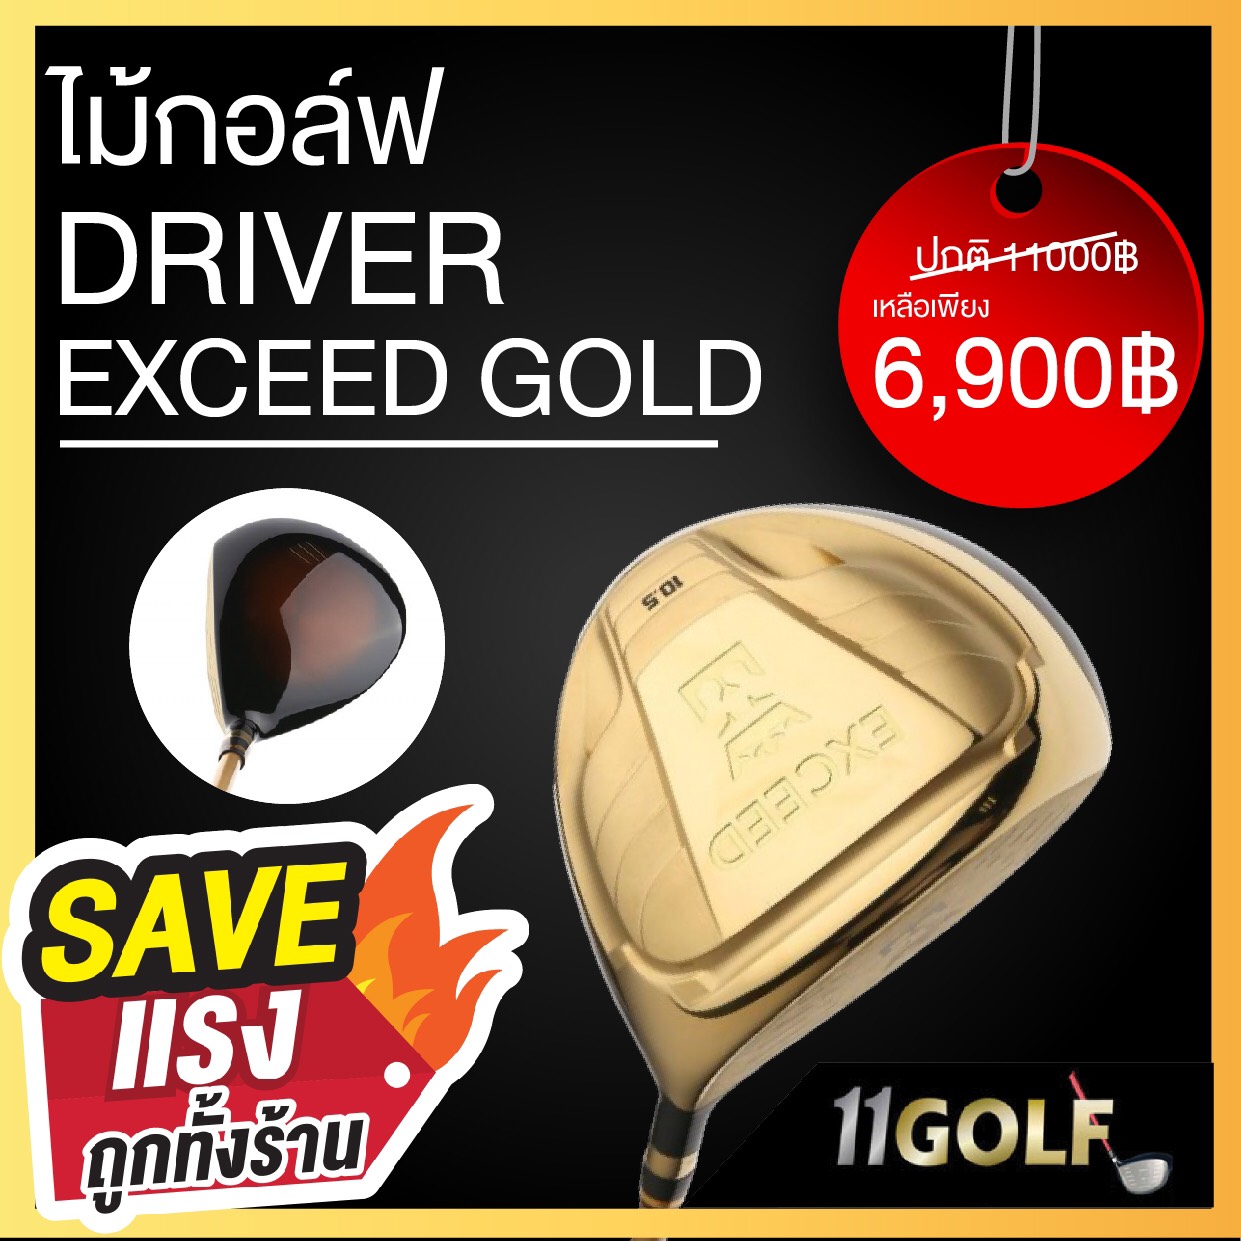 EXCEEDGOLF รหัส 6210004-07 ไม้กอล์ฟ DRIVER NEW EXCEED GOLD หน้าเด้งสุดขีด ตีไกลสุดขั้ว ชนรั้ว ชนธง จัดส่งฟรีทั่วประเทส